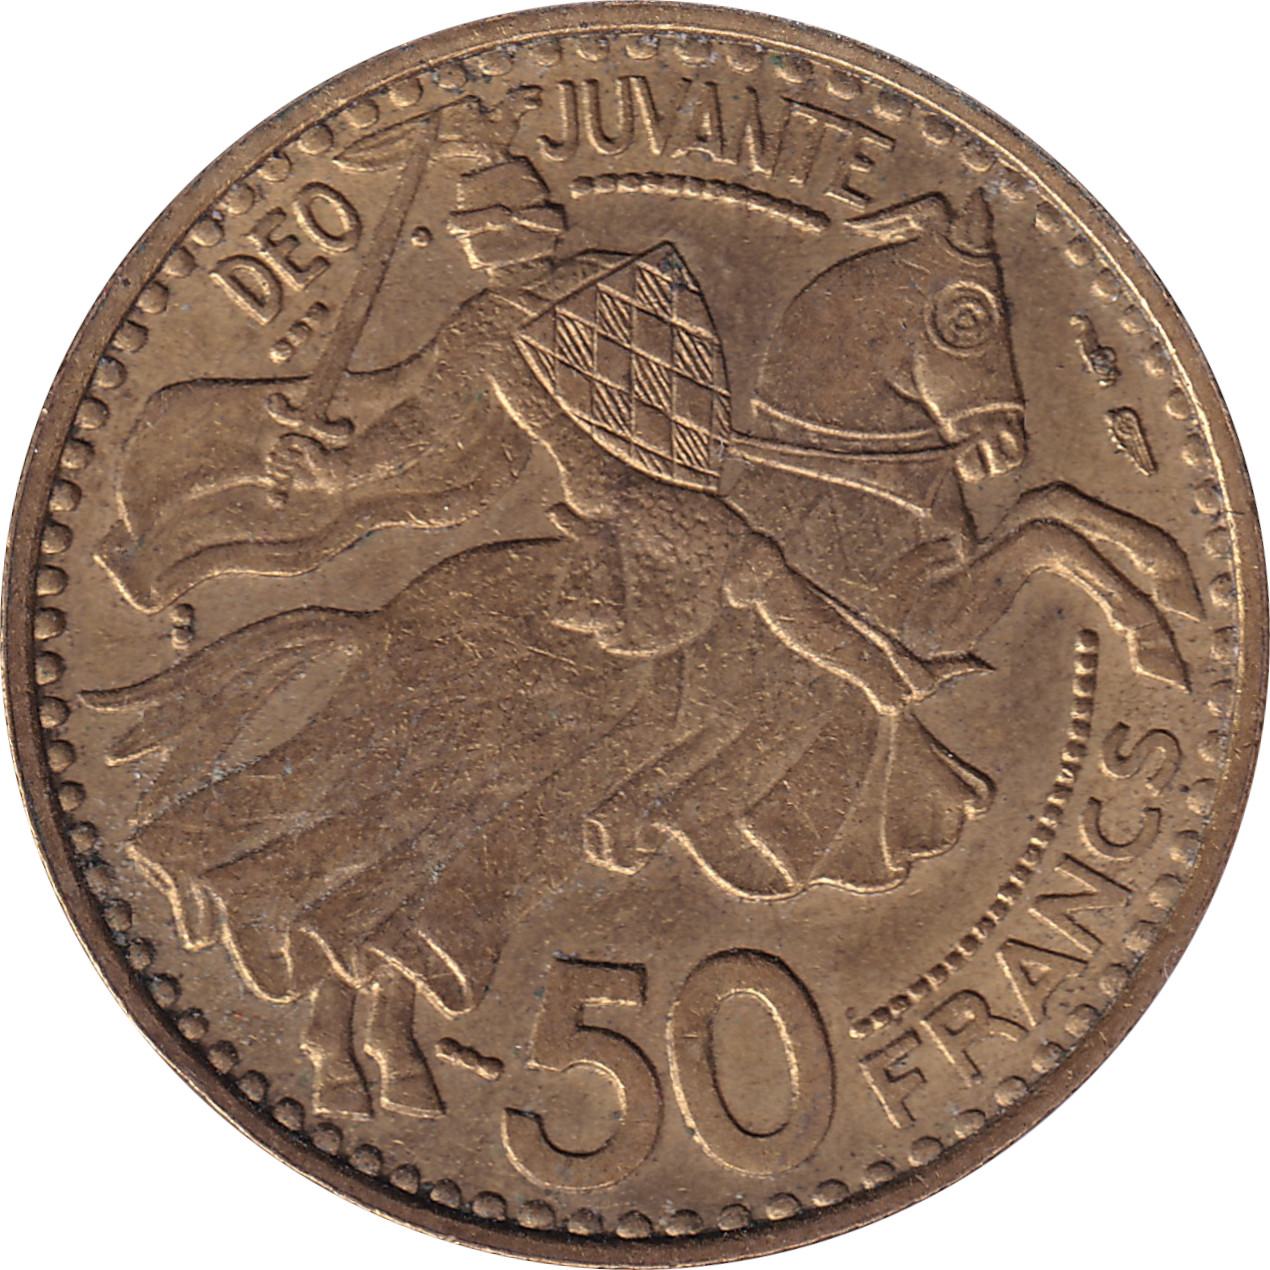 50 francs - Rainier III